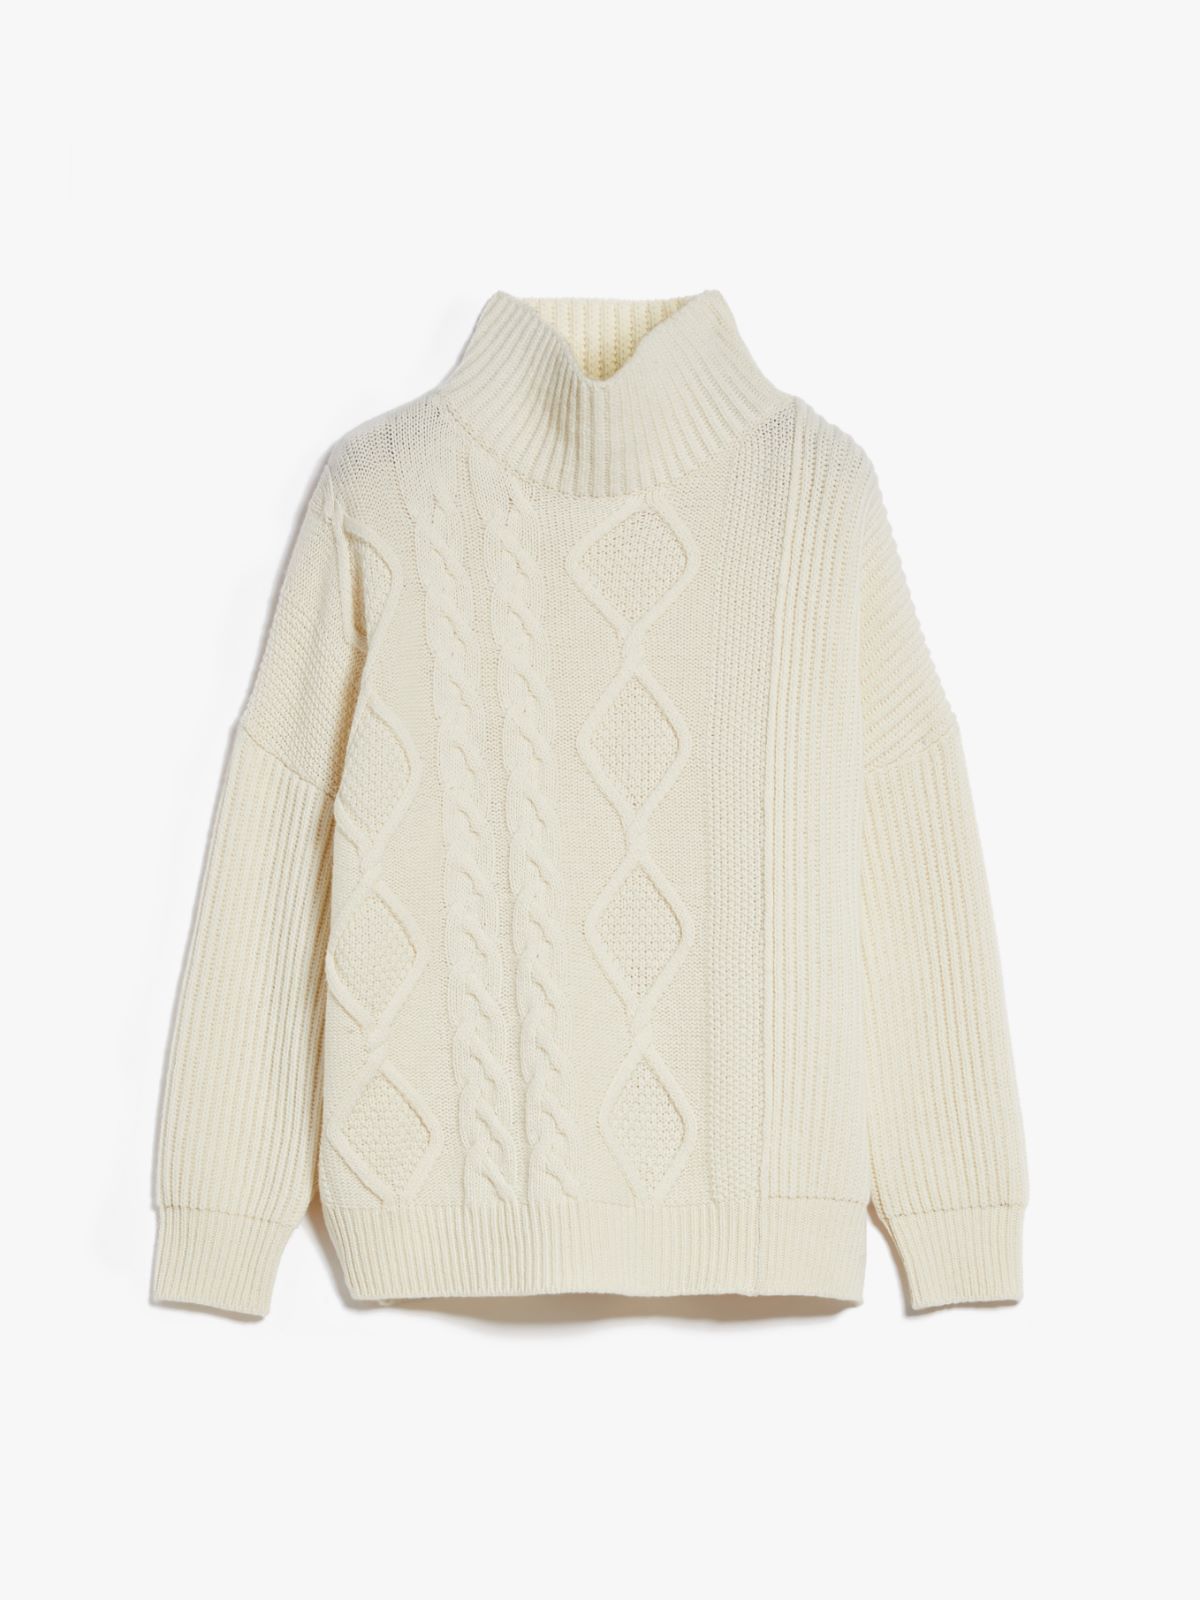 Wool yarn sweater - IVORY - Weekend Max Mara - 6